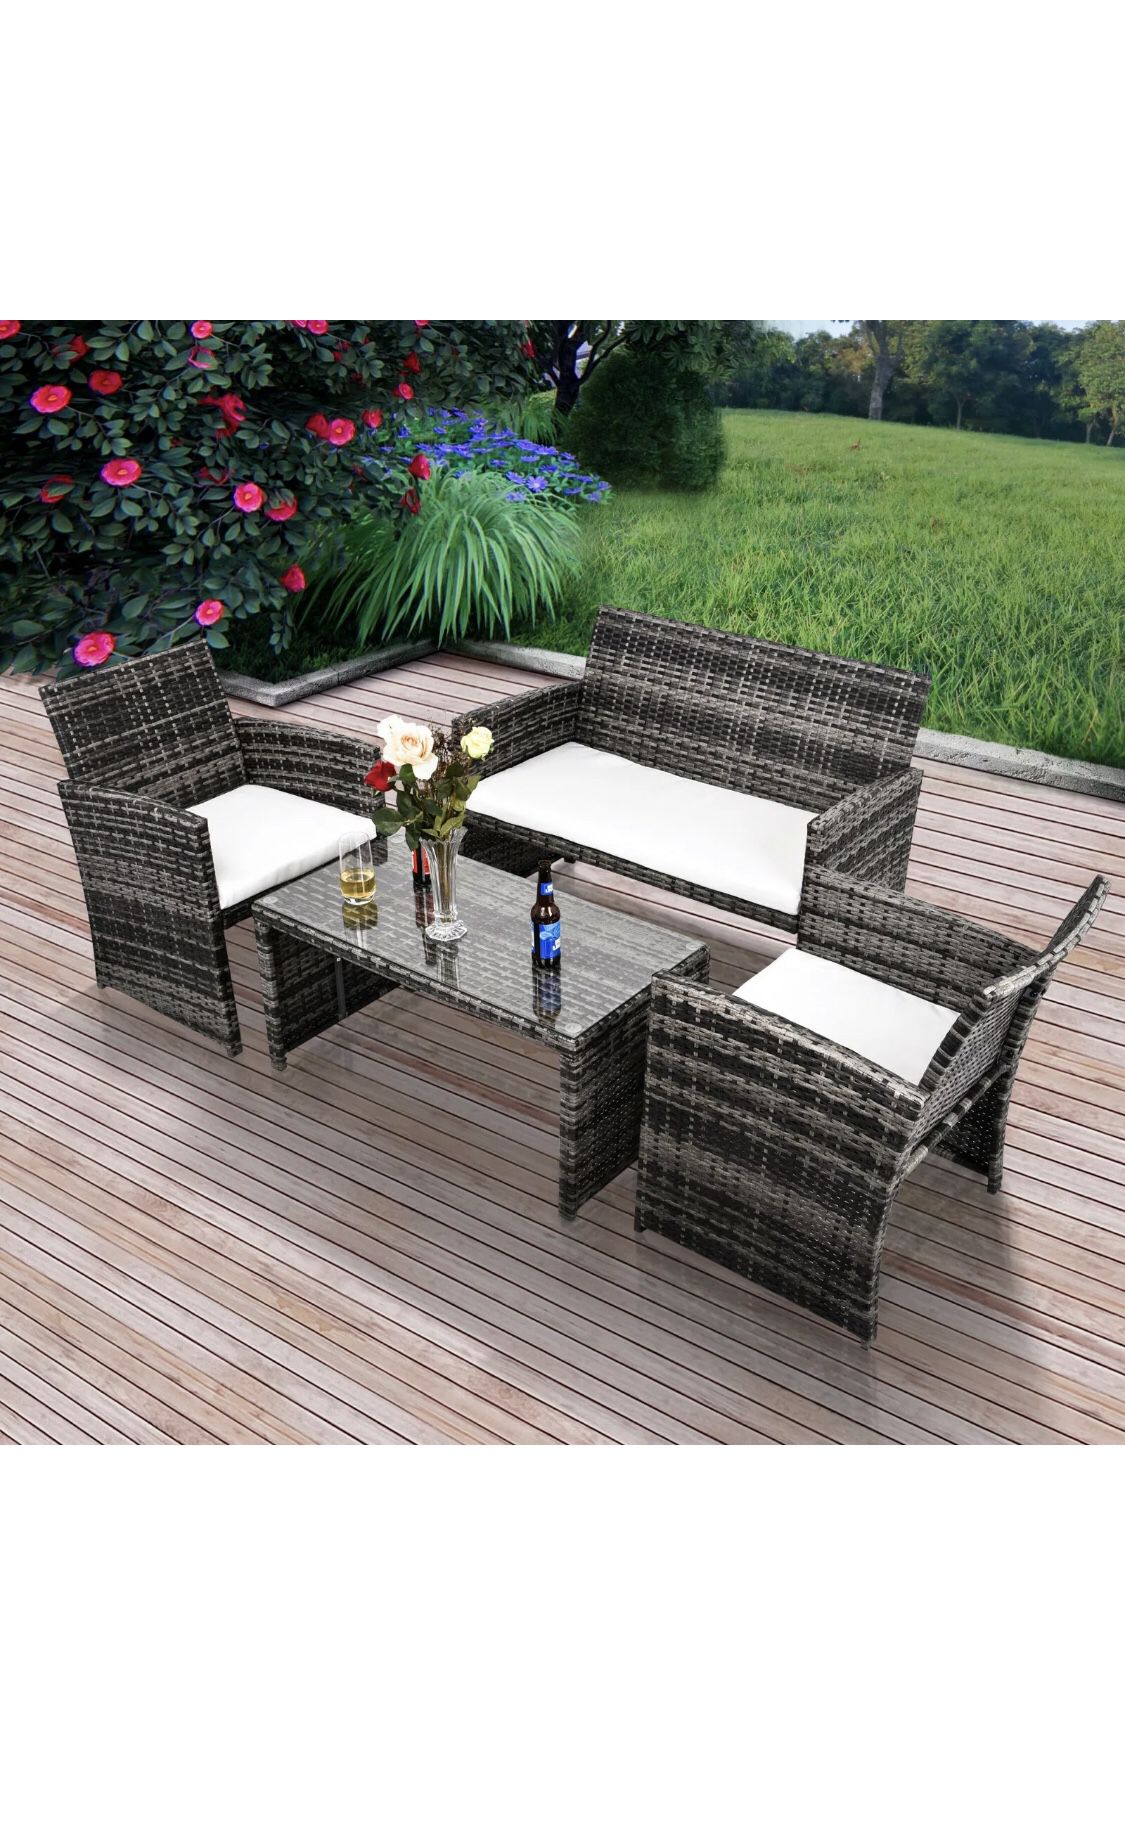 New 4 piece outdoor wicker furniture